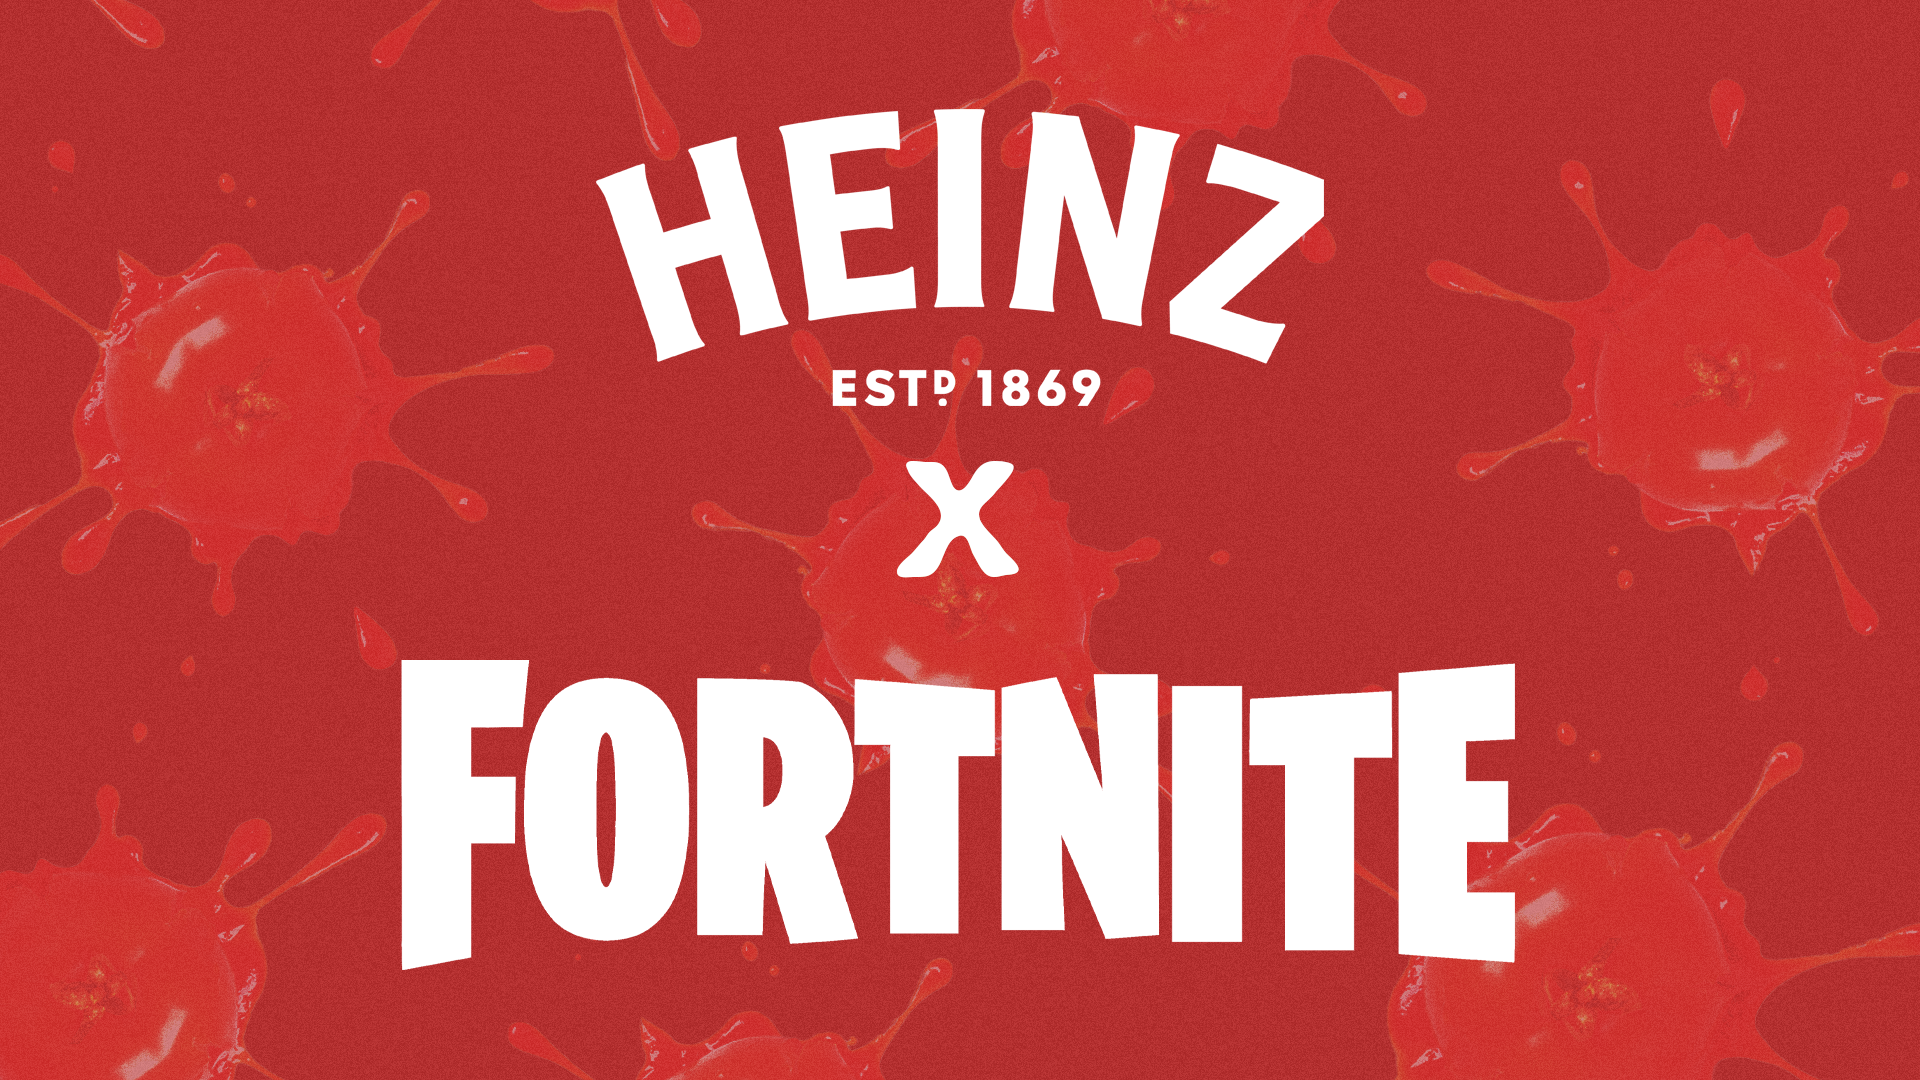 Heinz unveils Fortnite island to highlight soil degradation